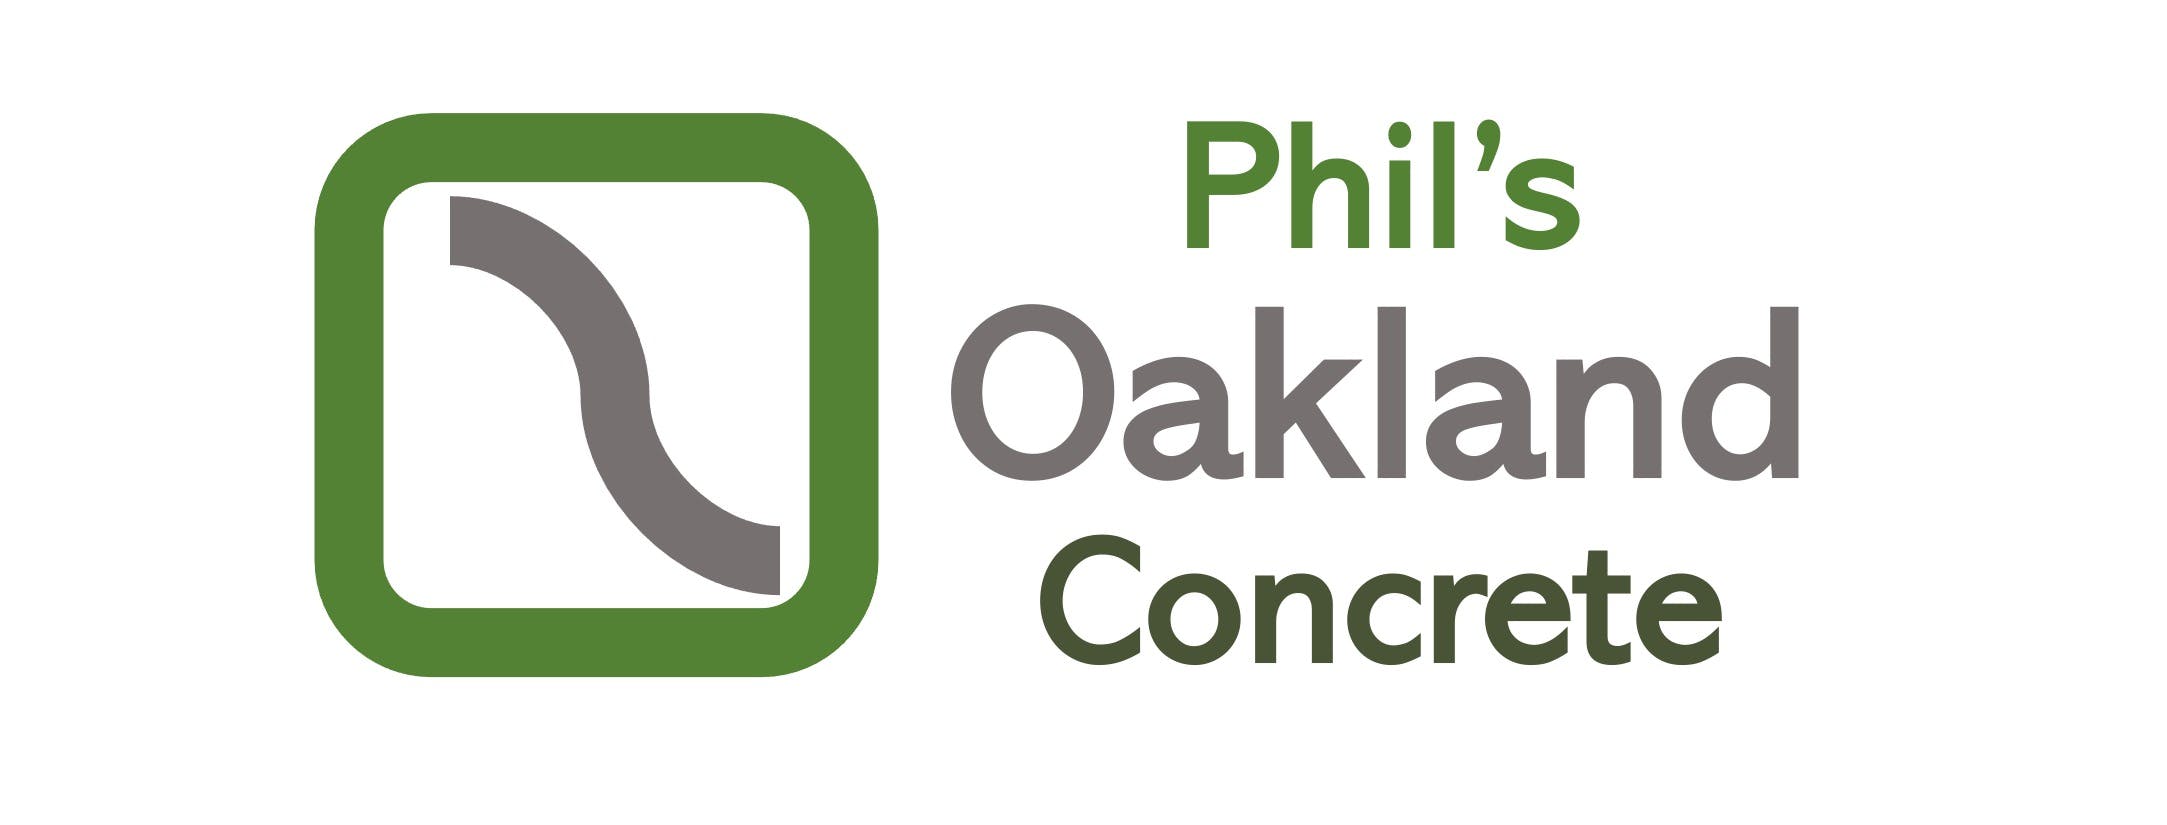 Phils Oakland Concrete logo